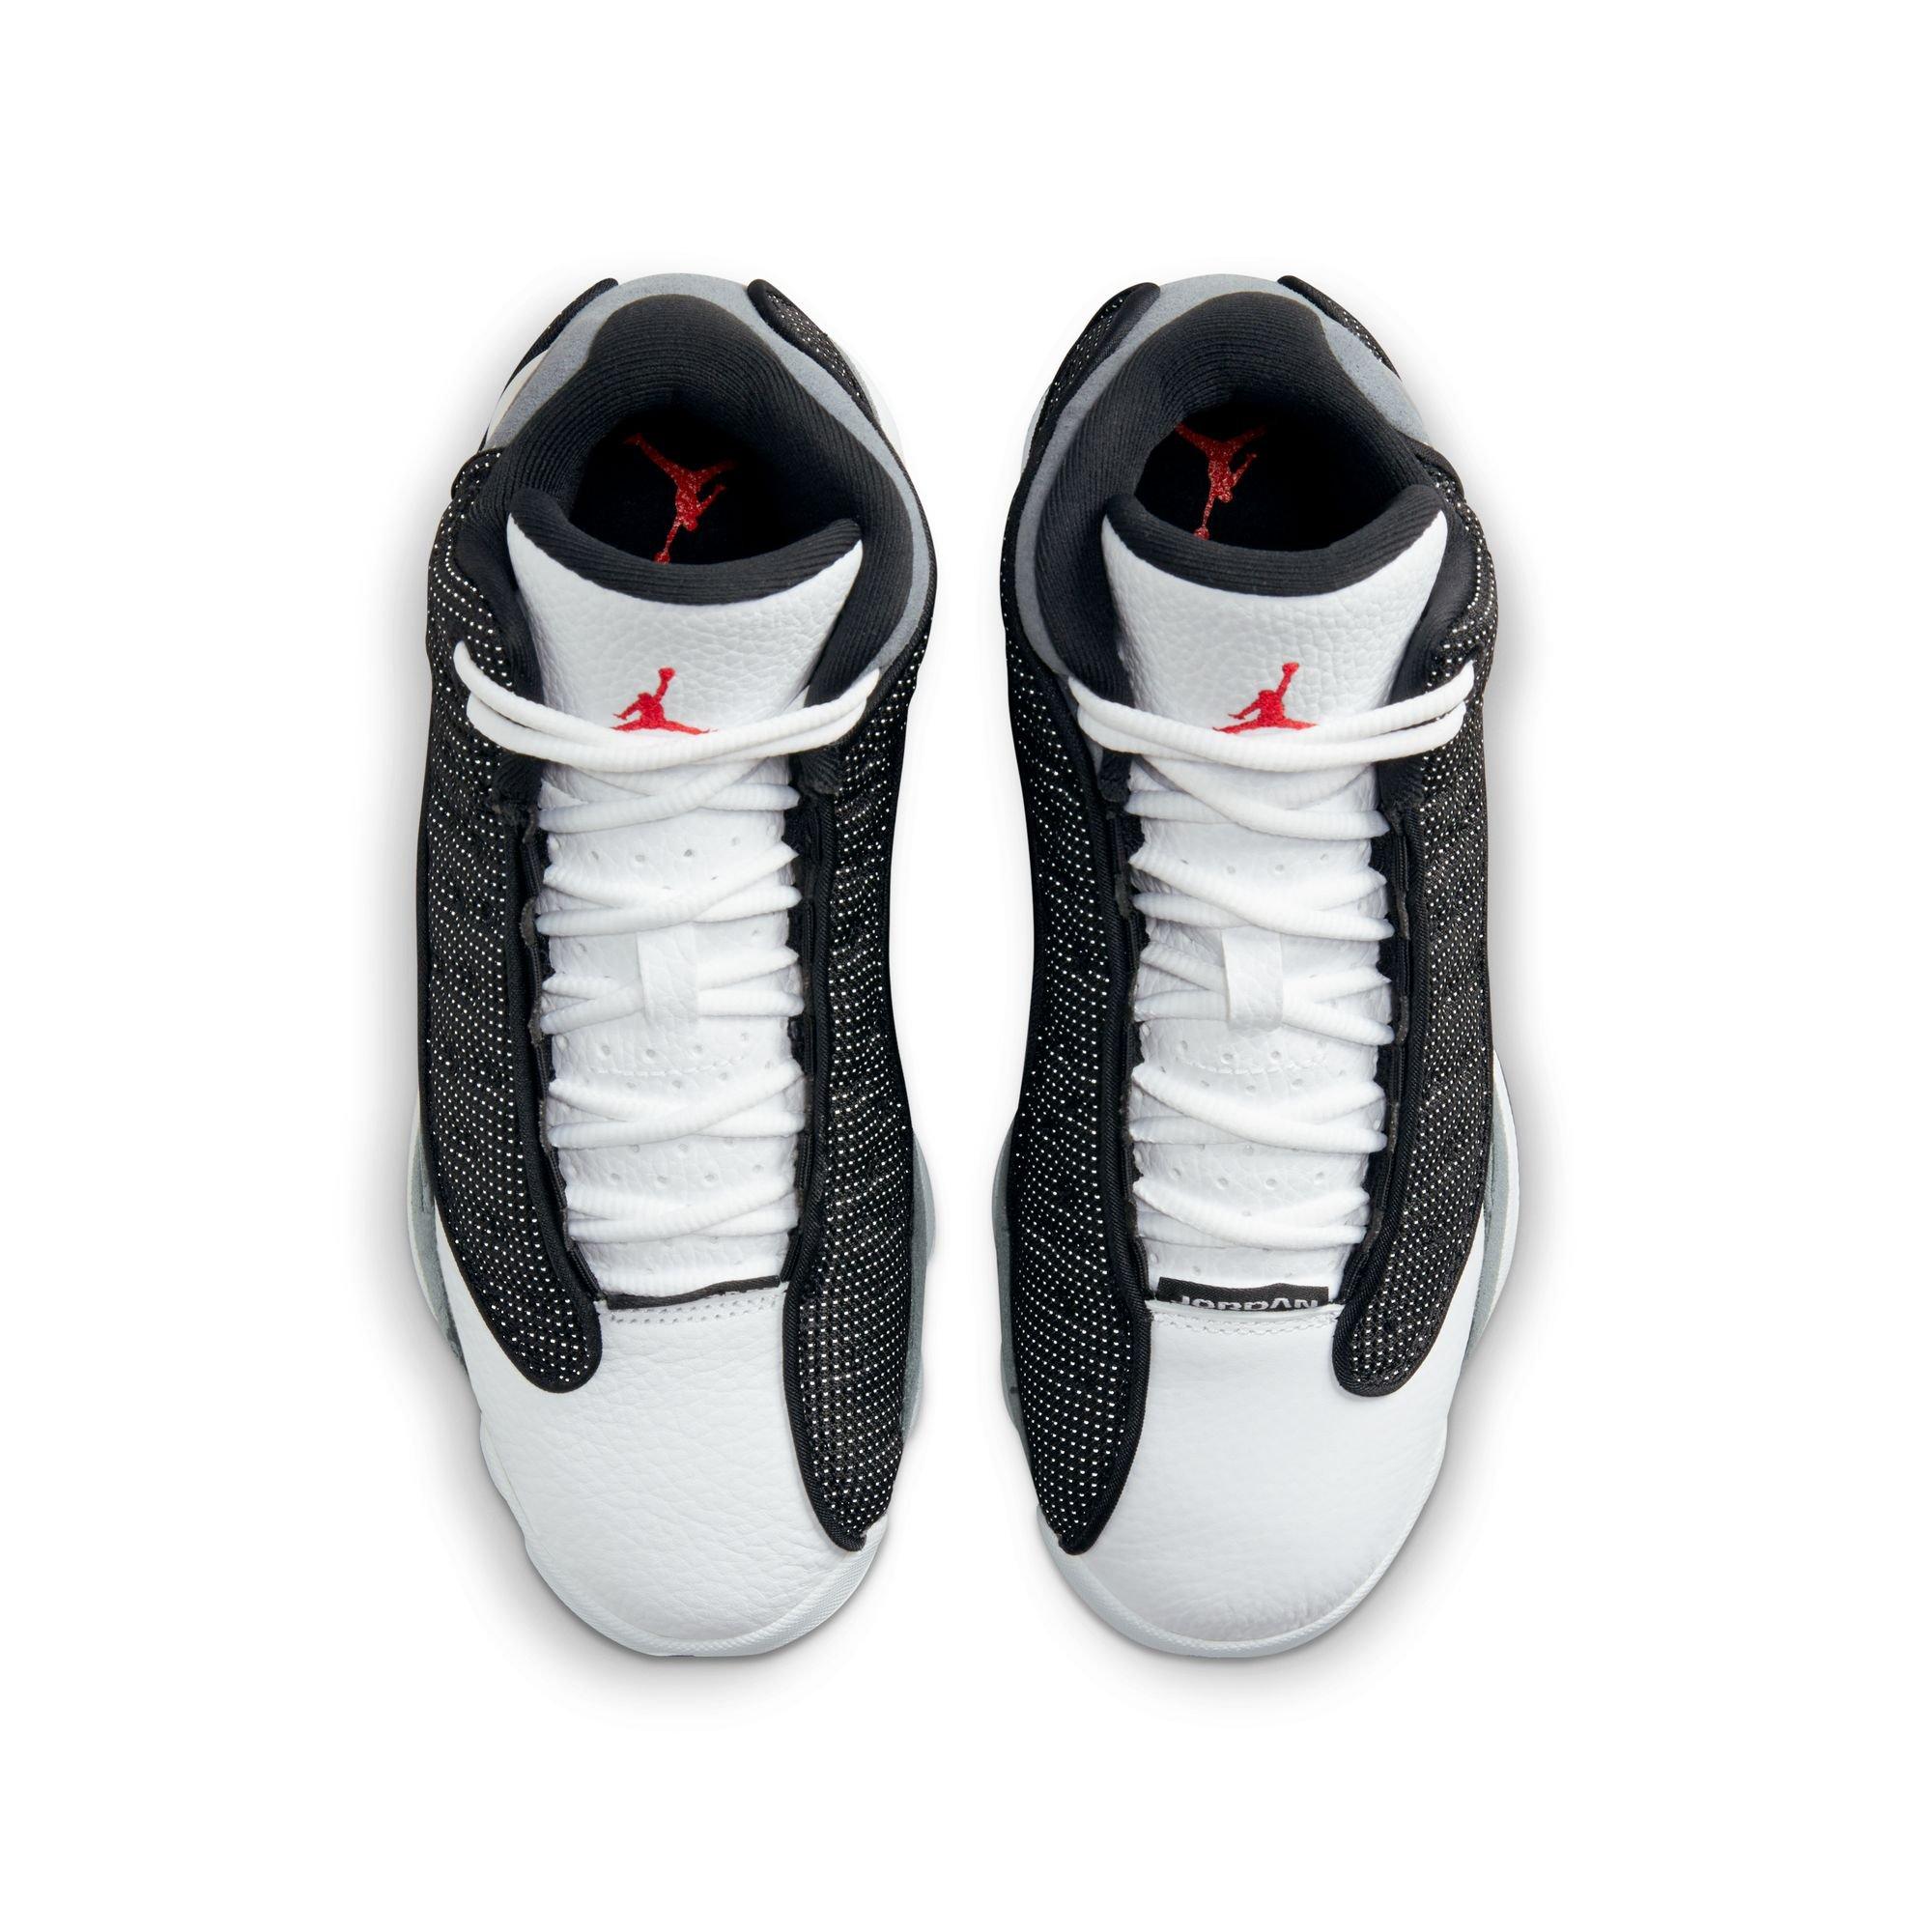 Where to Buy the Air Jordan 13 “Red Flint”